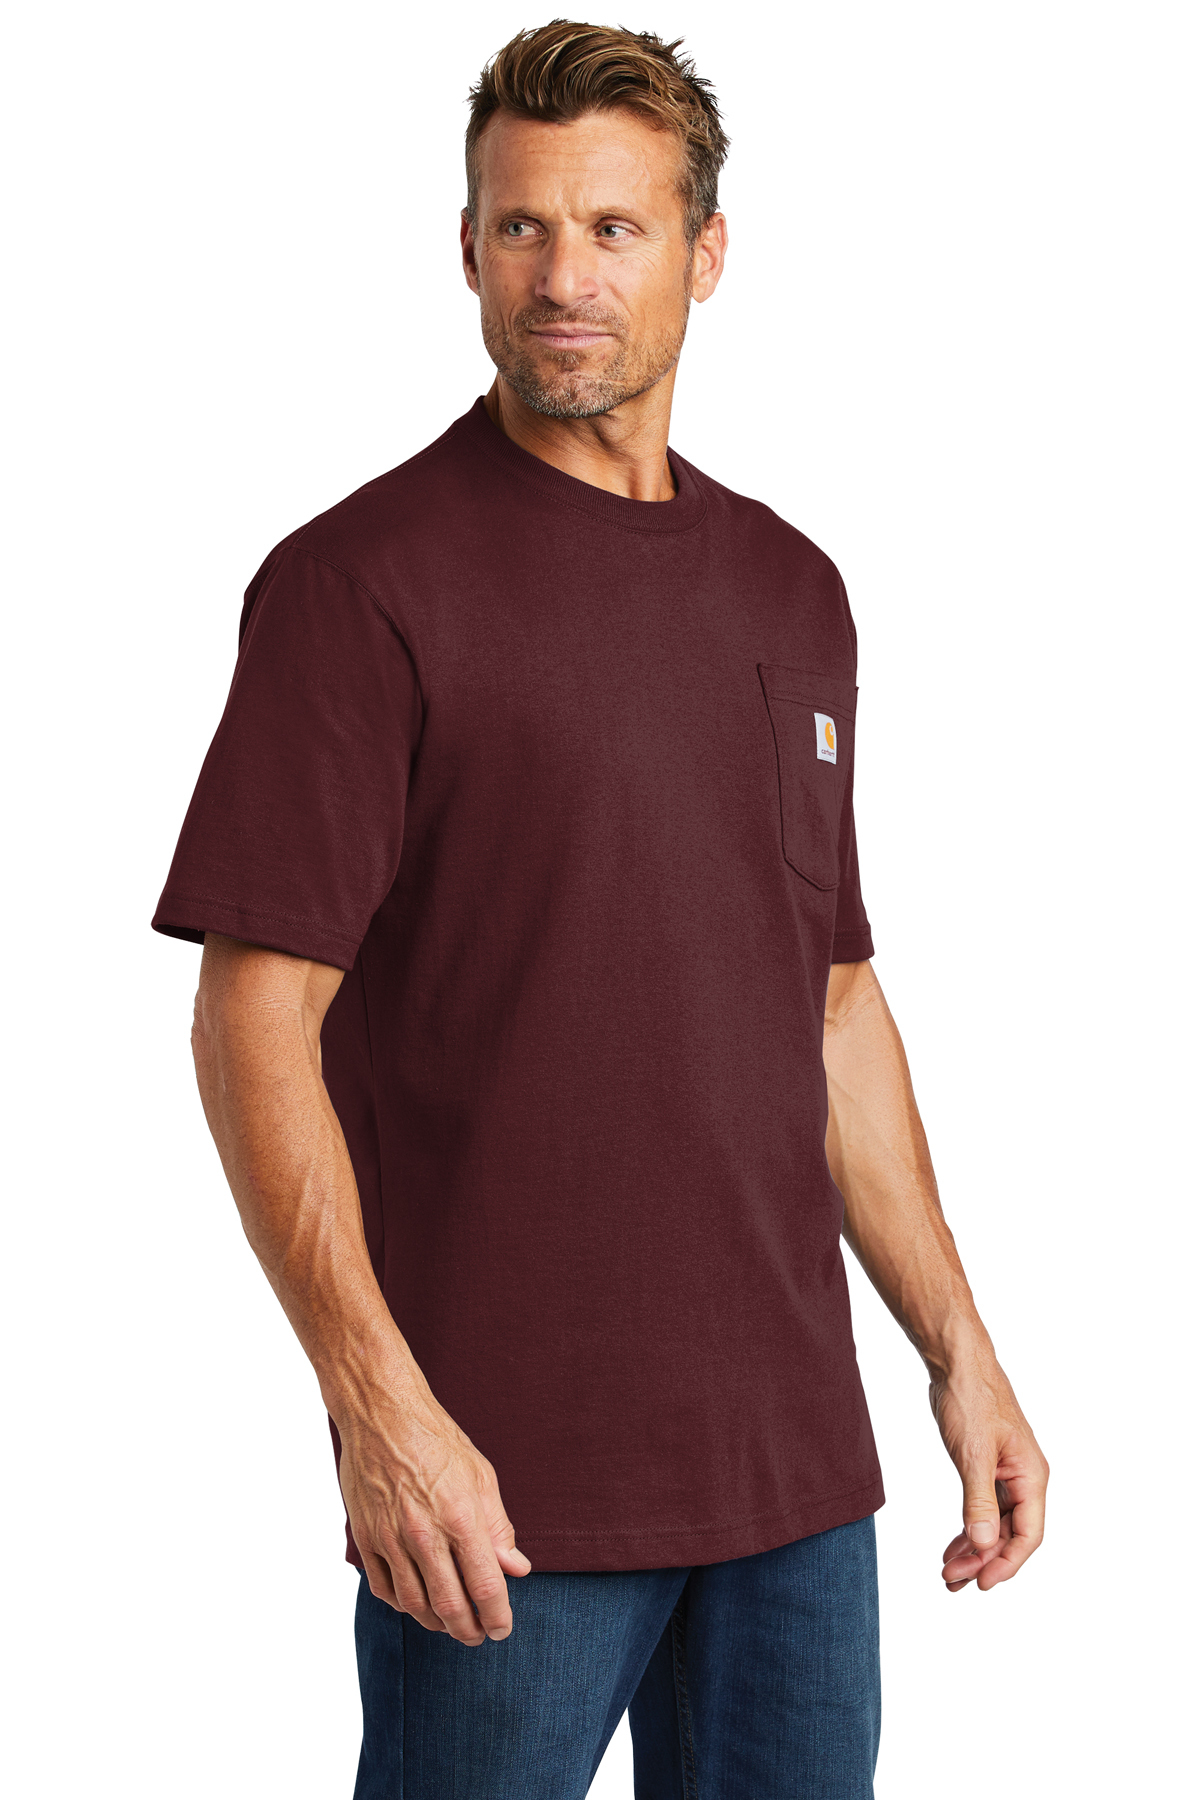 Carhartt Workwear Short Sleeve Product T-Shirt SanMar | | Pocket